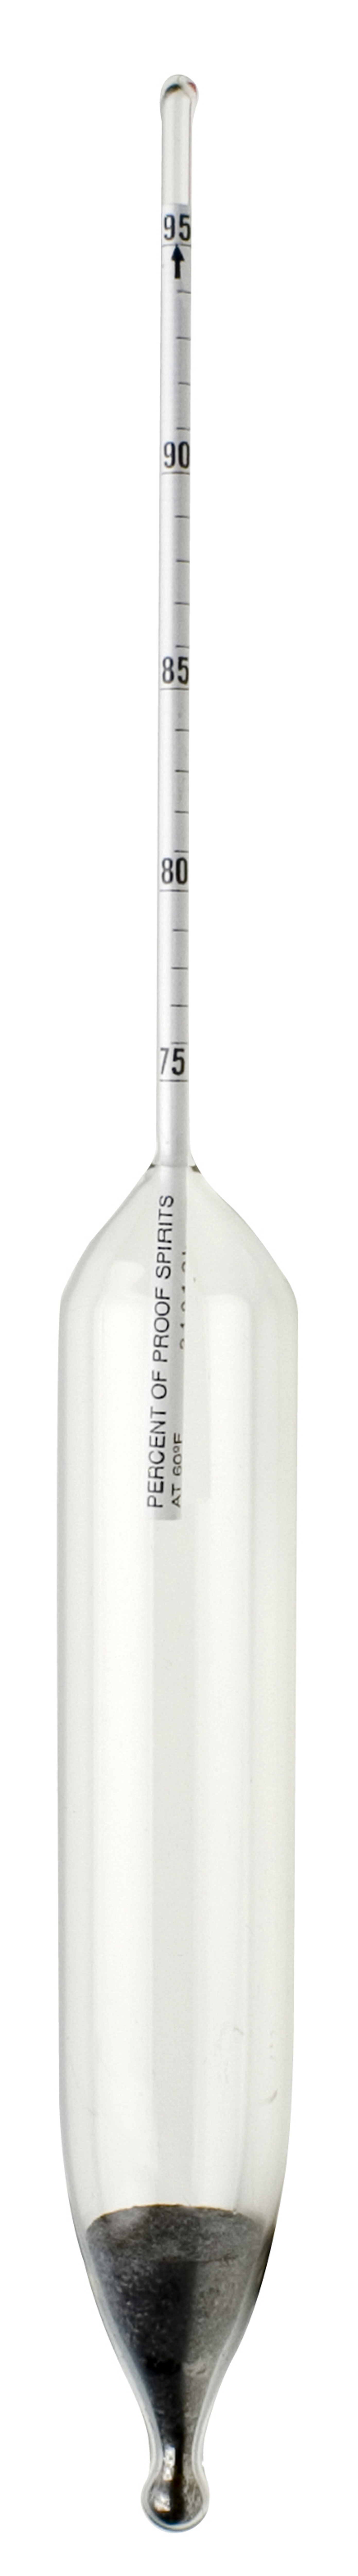 SP Bel-Art, H-B DURAC 185/206 Percent Alcohol Proof – Ethyl Alcohol Hydrometer